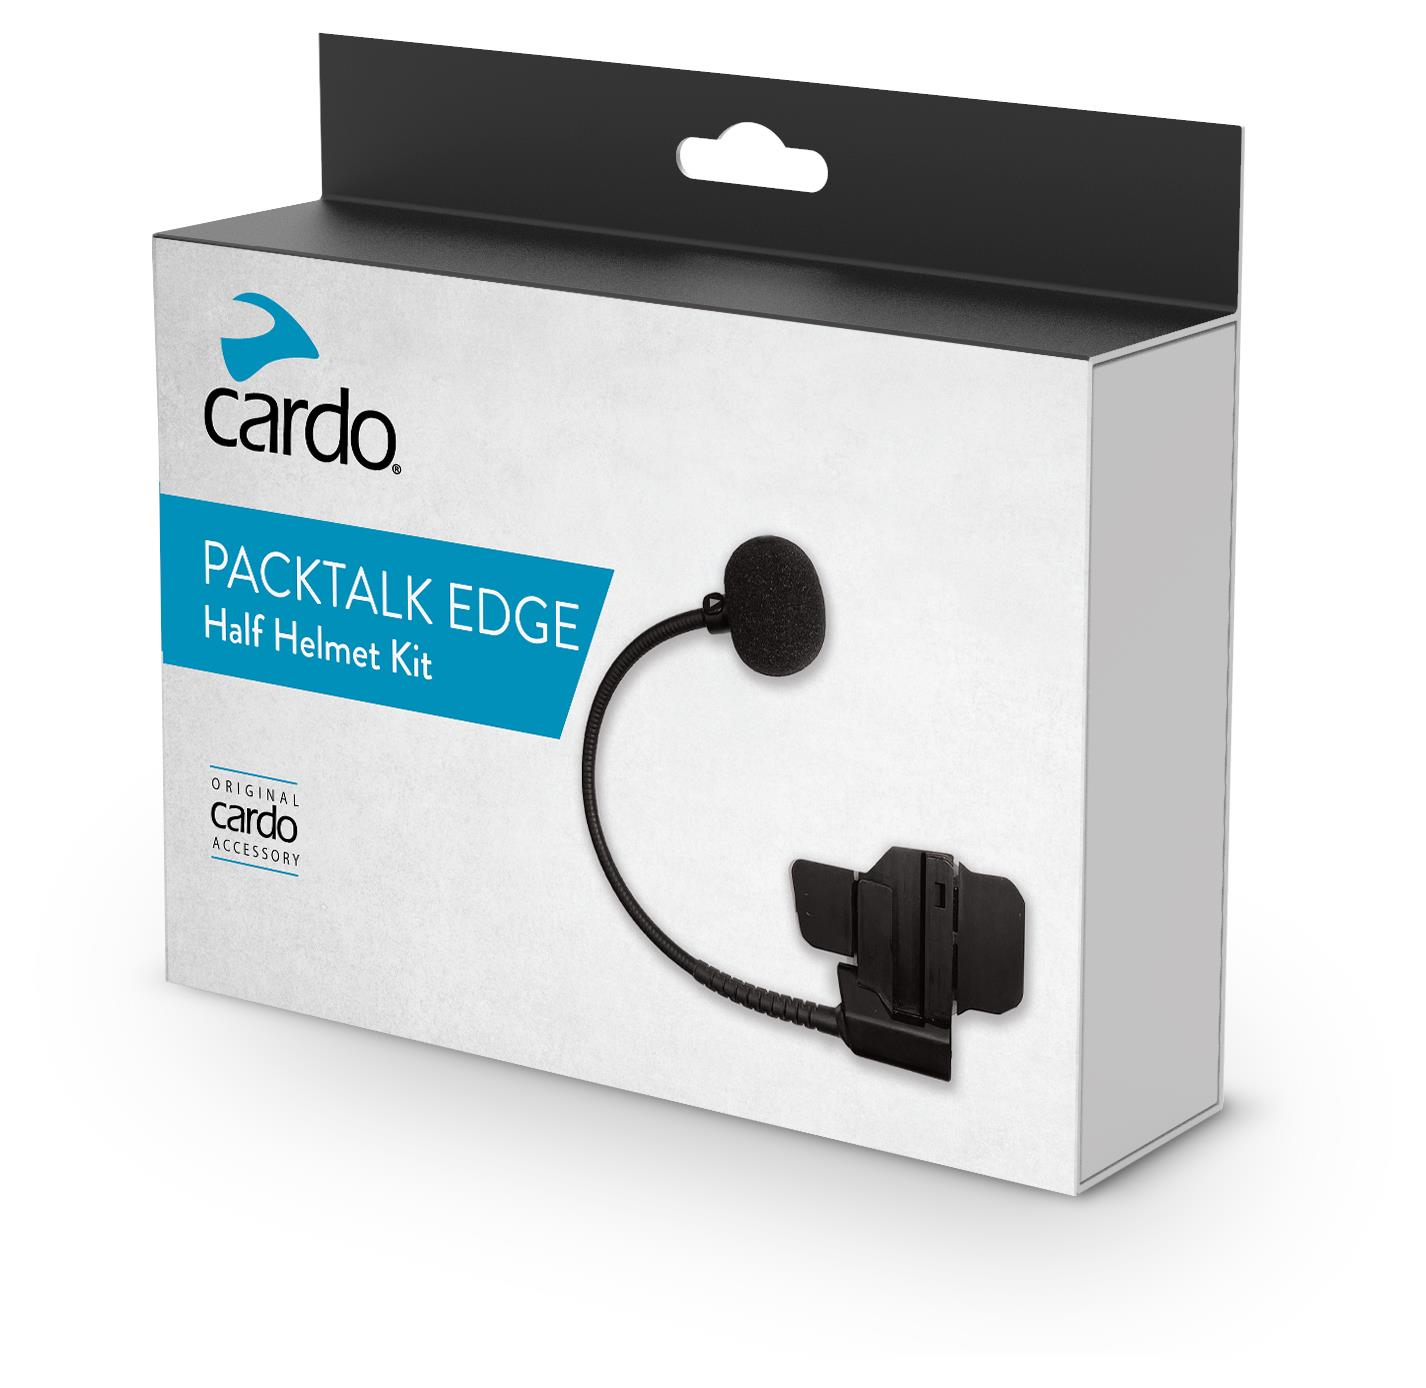 Cardo Packtalk Edge Half Helmet Kit Audio kit with microphone